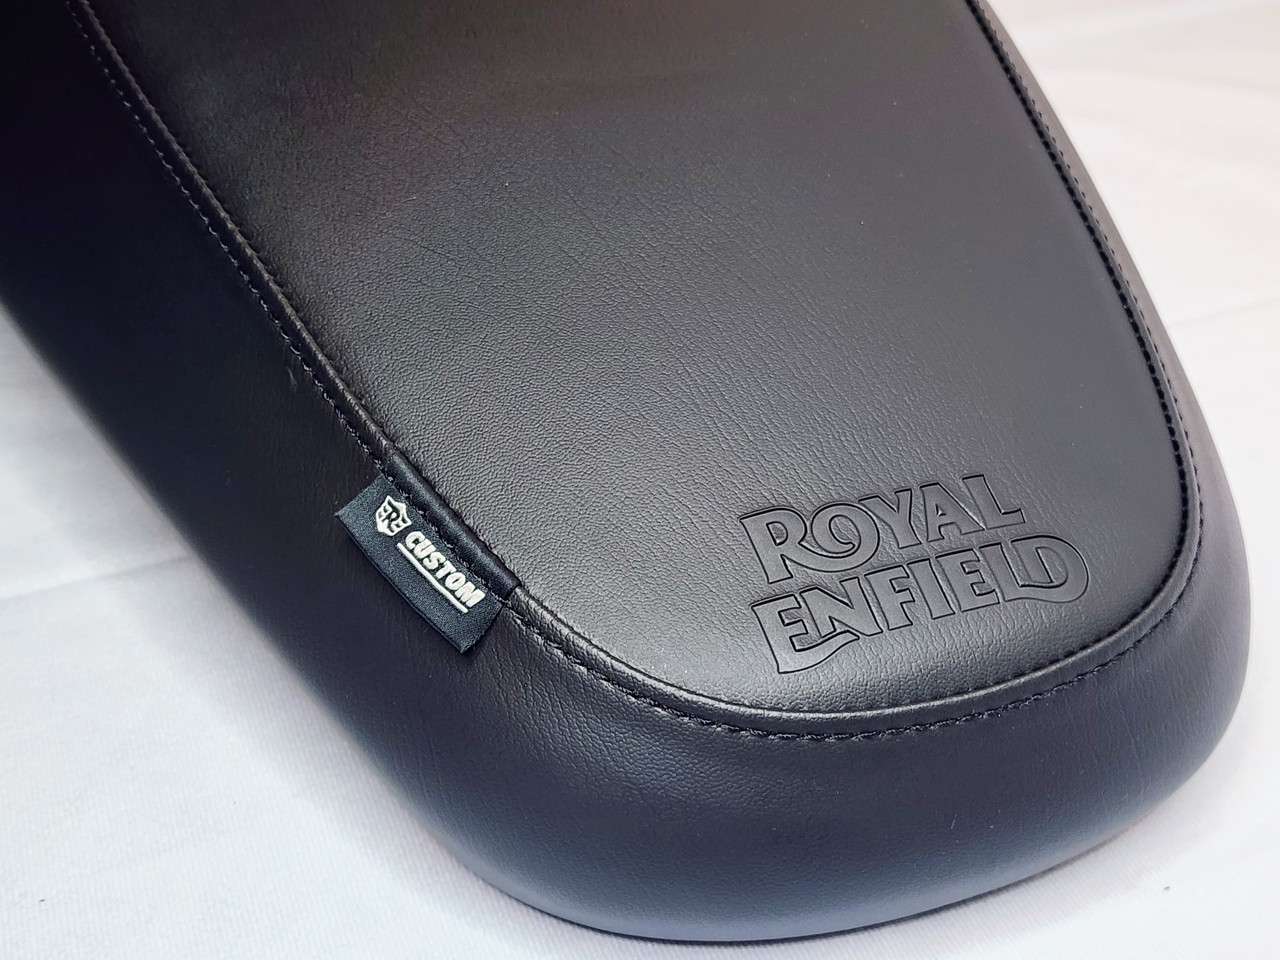 Custom Seat for Hunter Models (Royal Enfield)